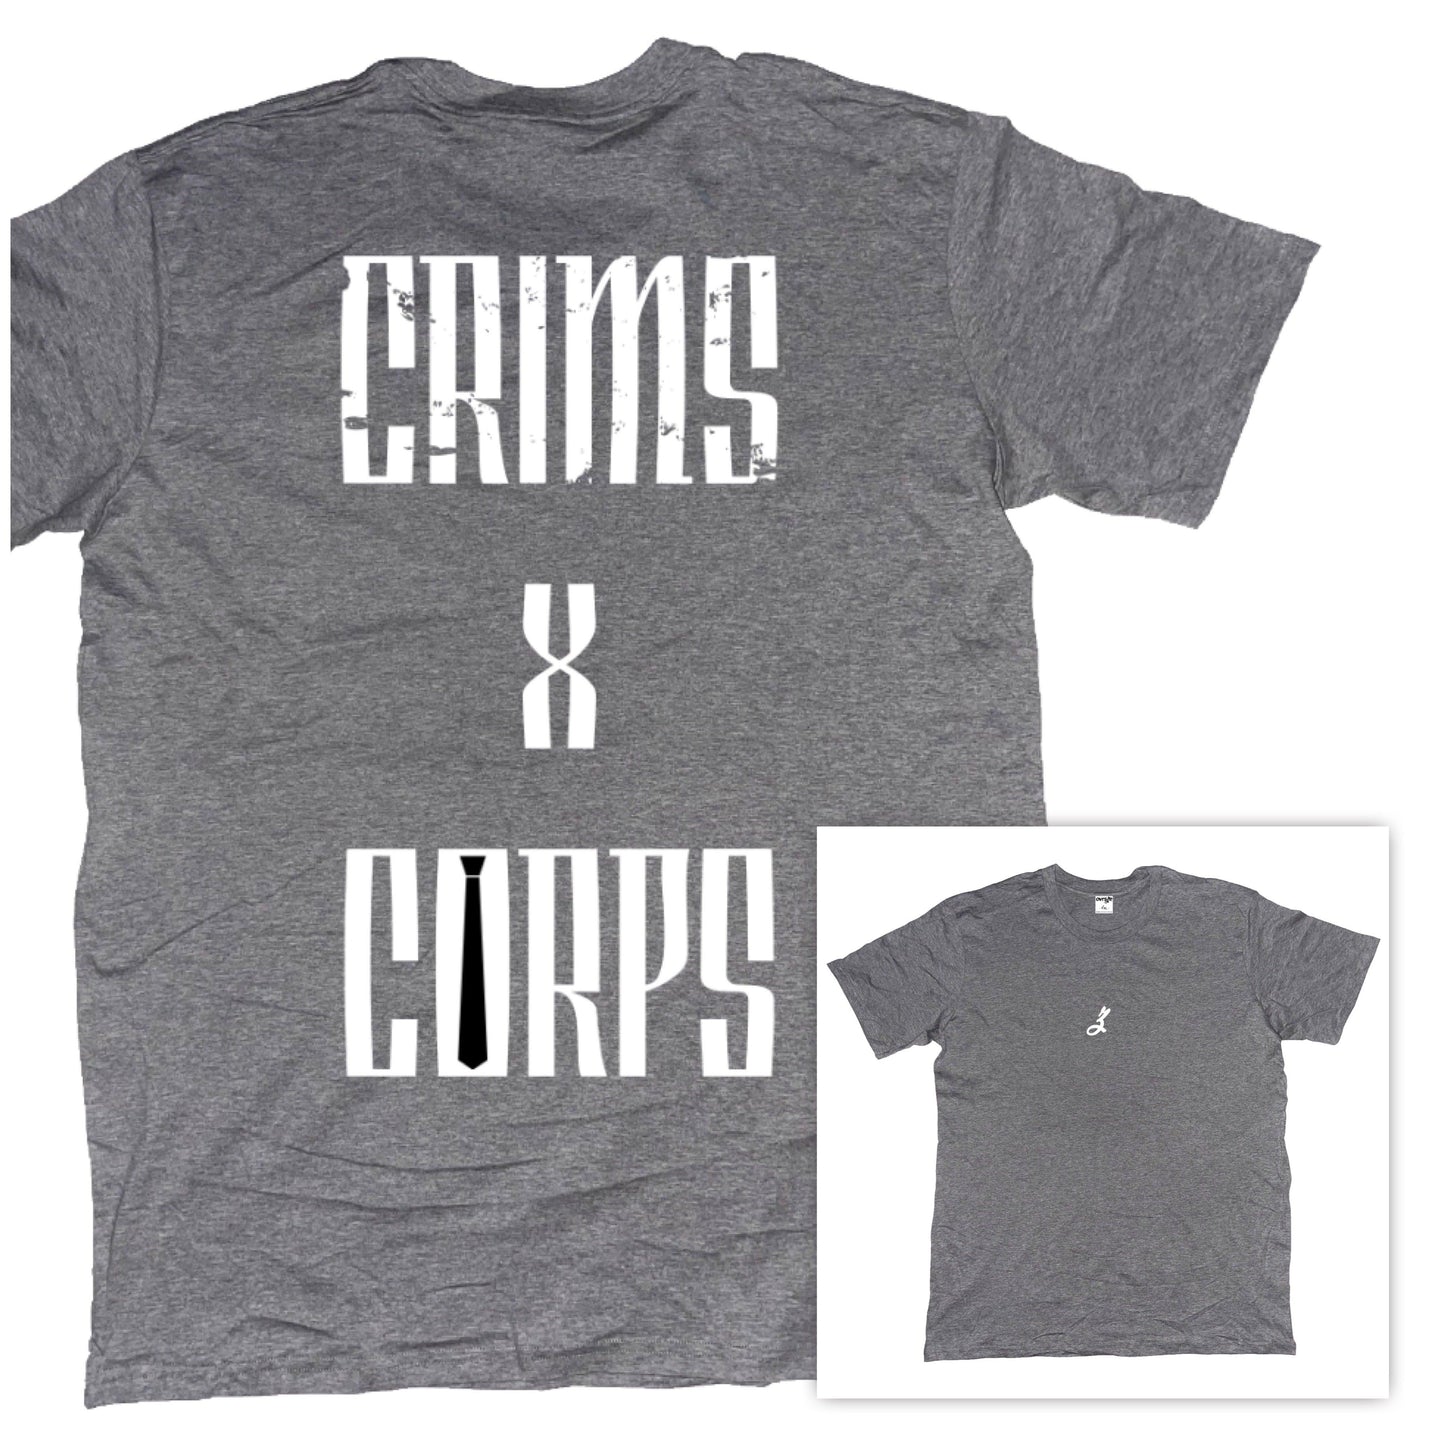 crims x corps [t-shirt] - ovrsze